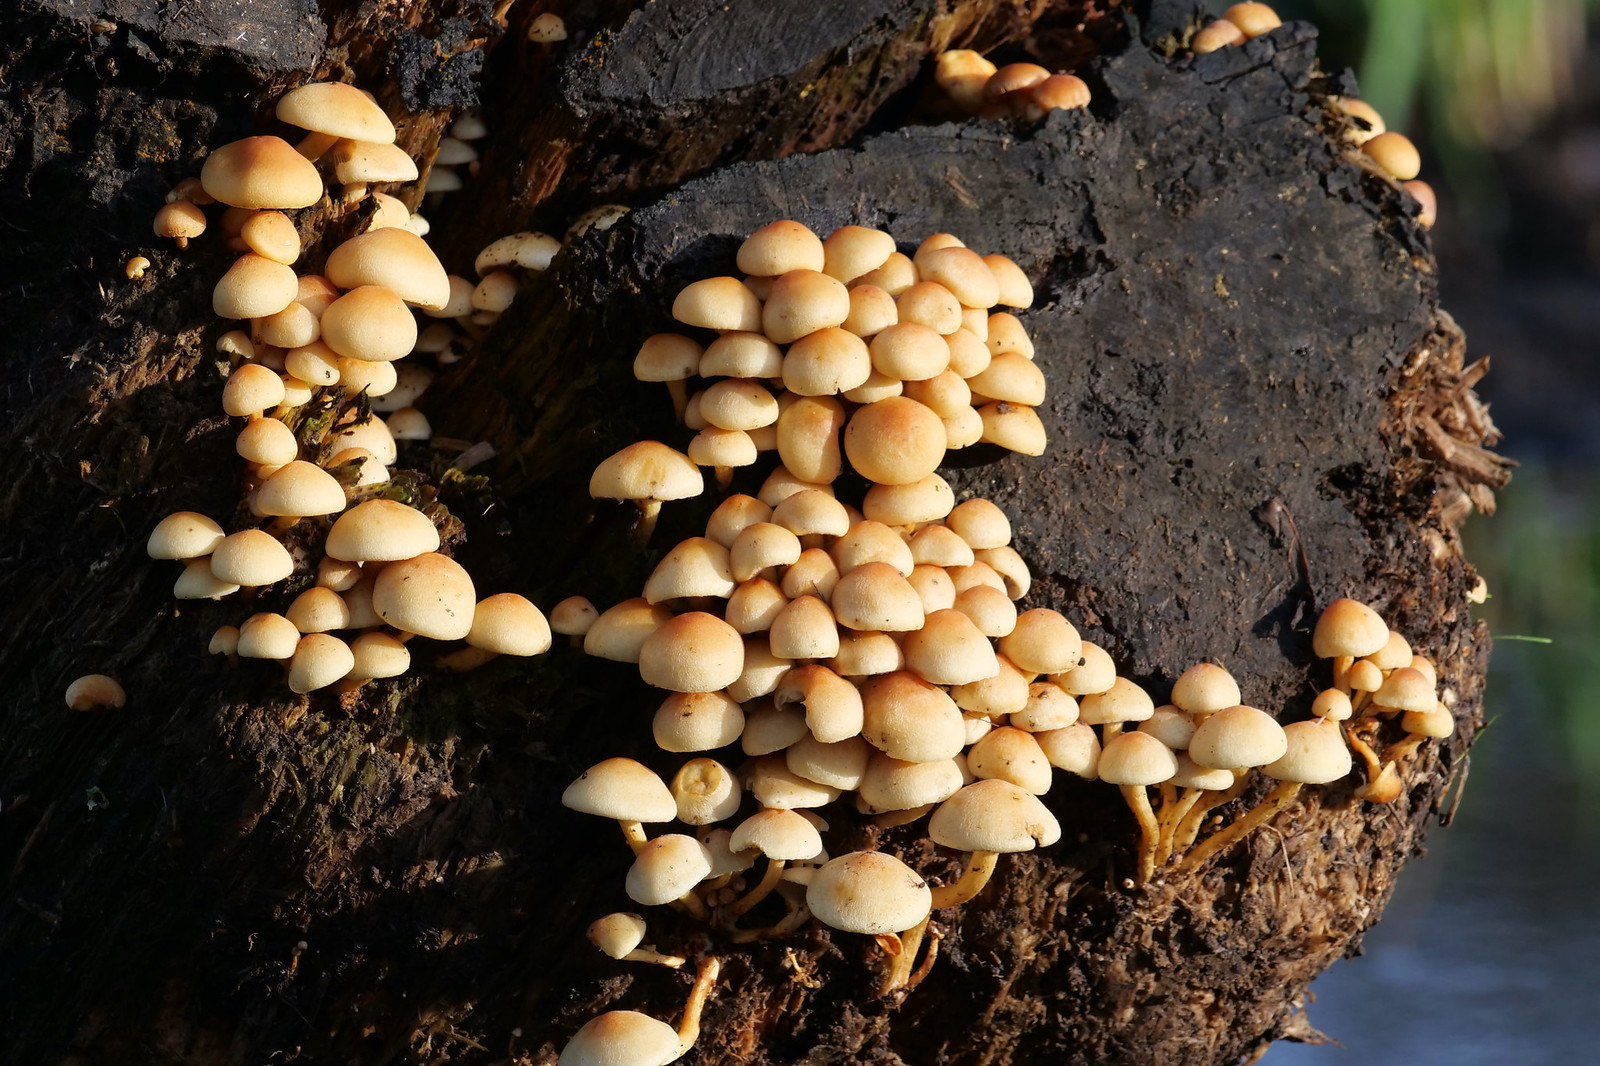 Fungi on a dead tree